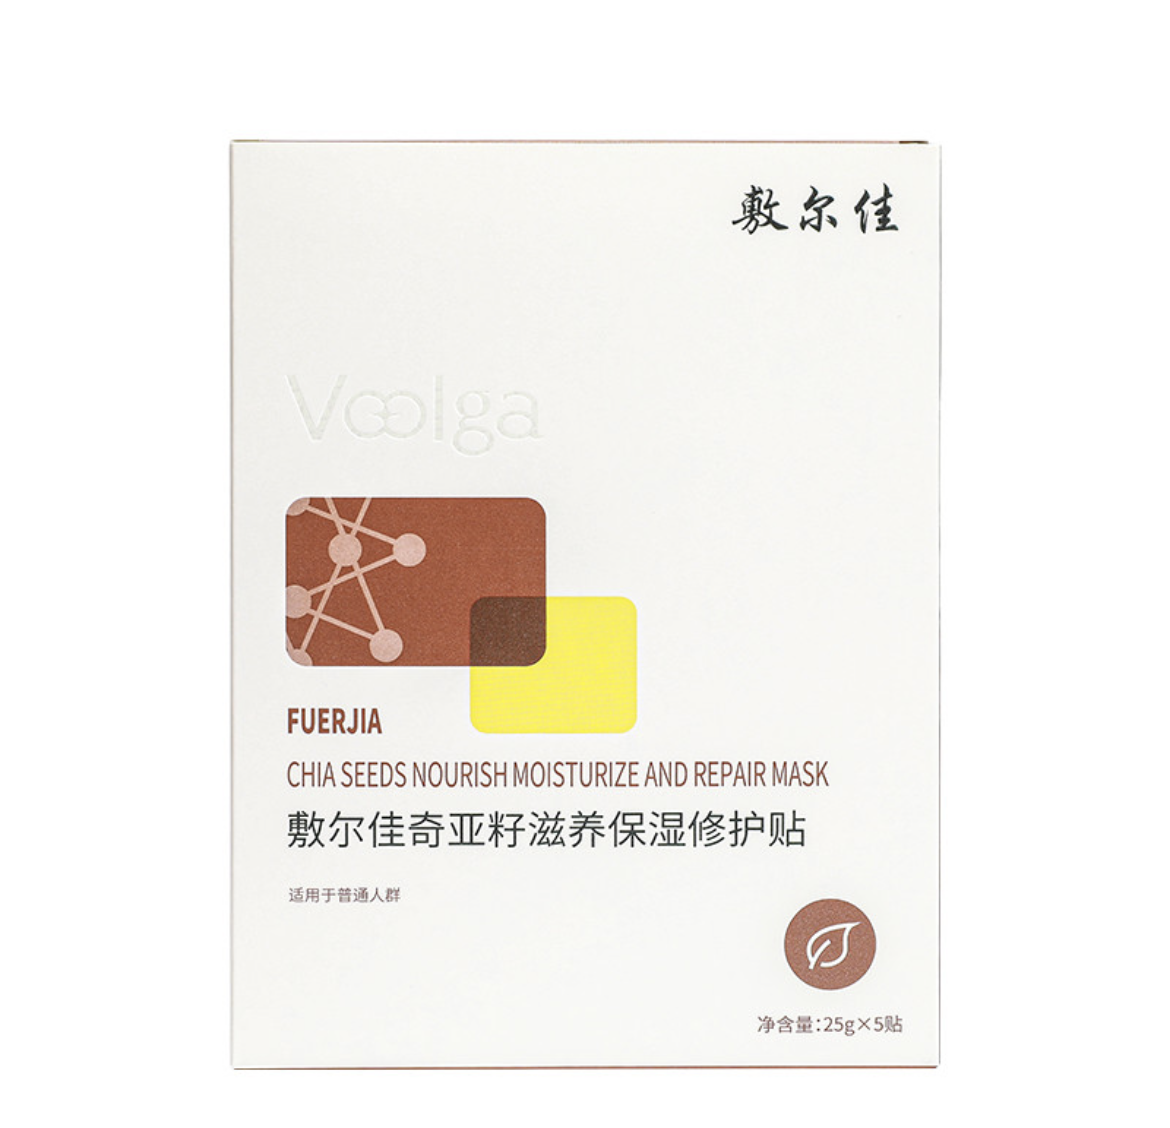 Voolga Chia Seed Nourishing Moisturizing Mask 25g*5 敷尔佳奇亚籽滋养保湿修护贴